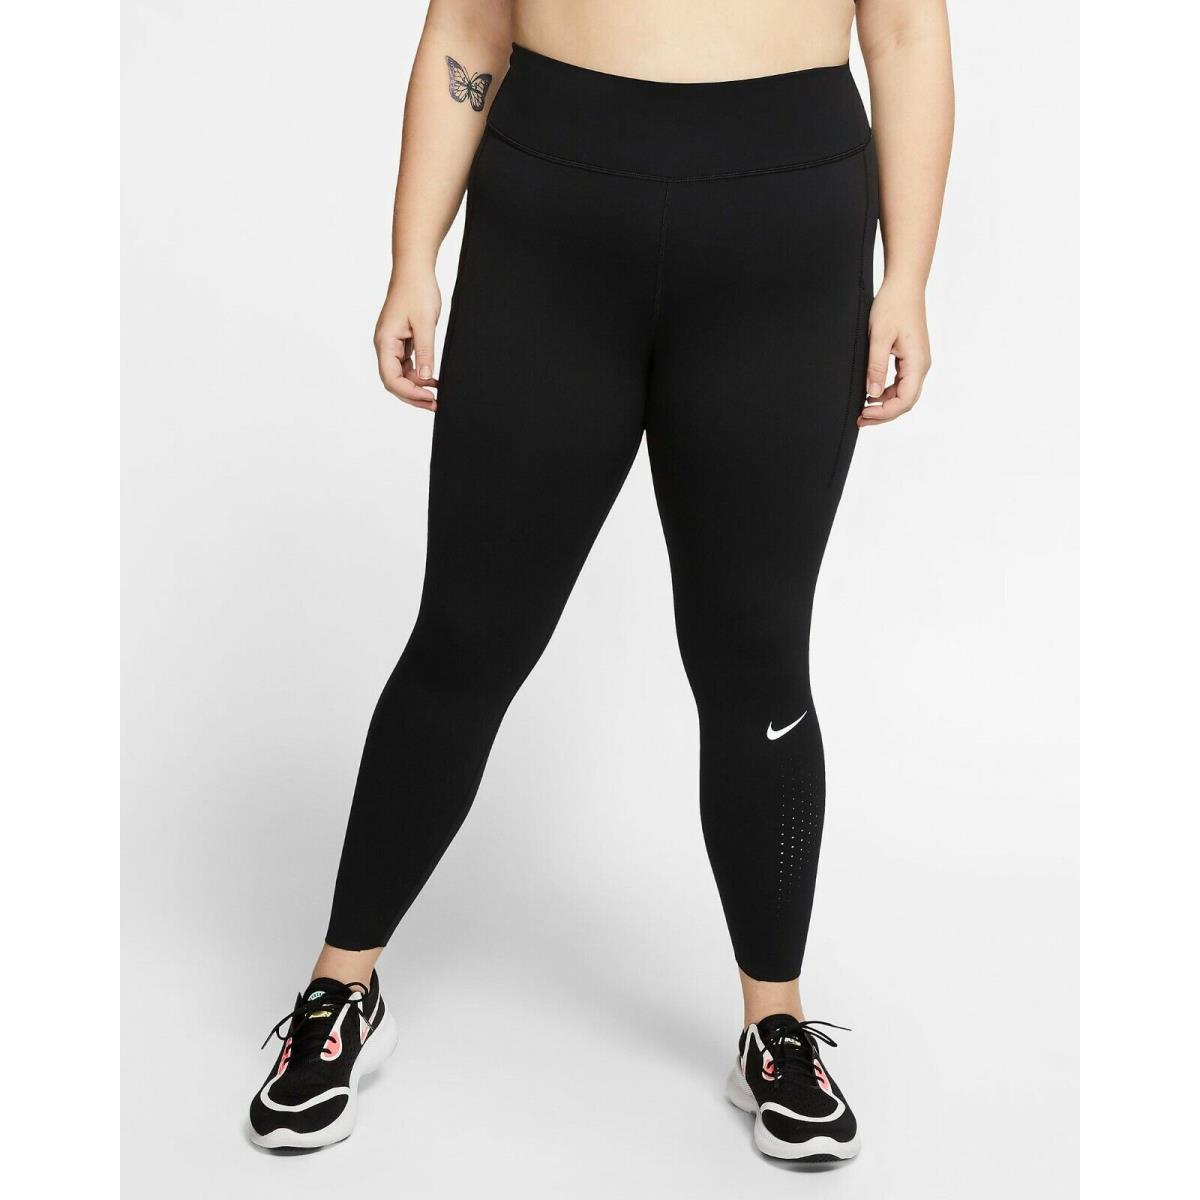 Nike Women`s Epic Luxe Leggings Athletic Pants Black Plus Size 2X 20W 22W